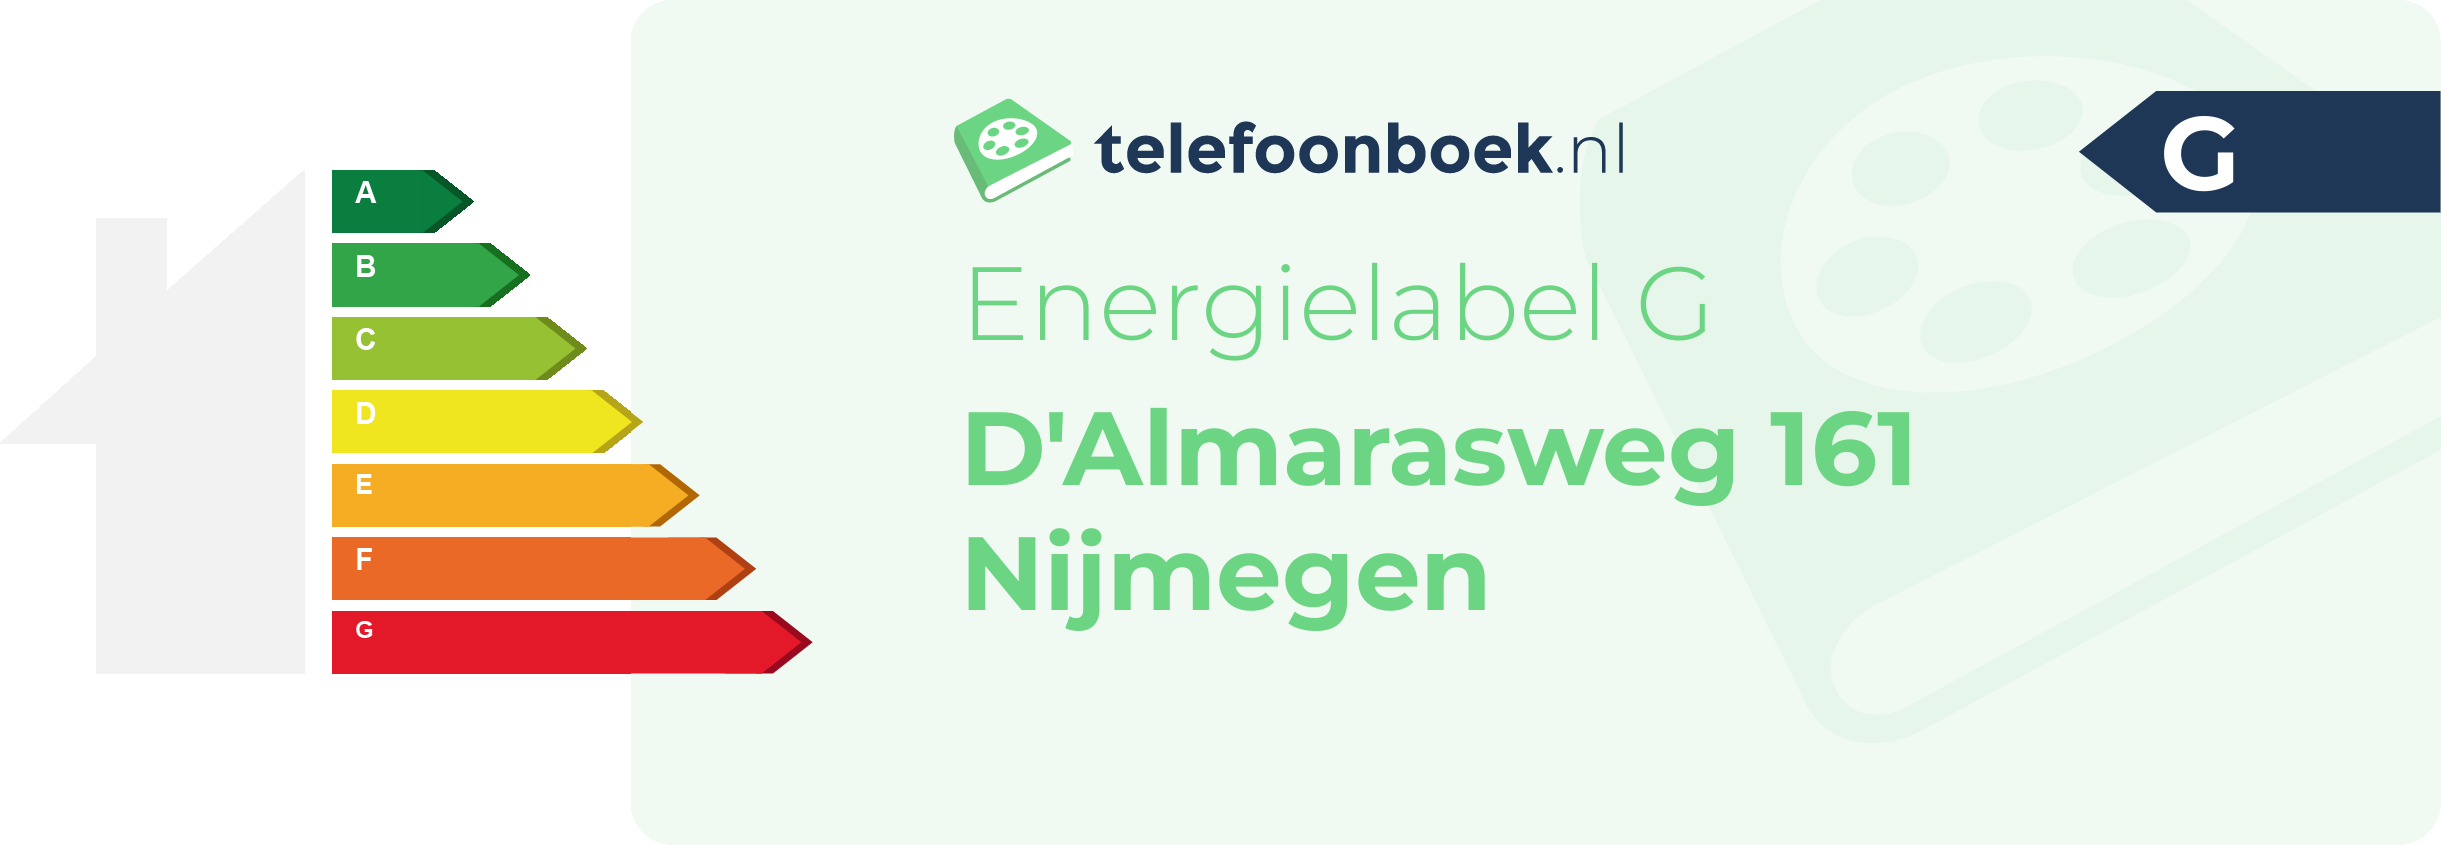 Energielabel D'Almarasweg 161 Nijmegen